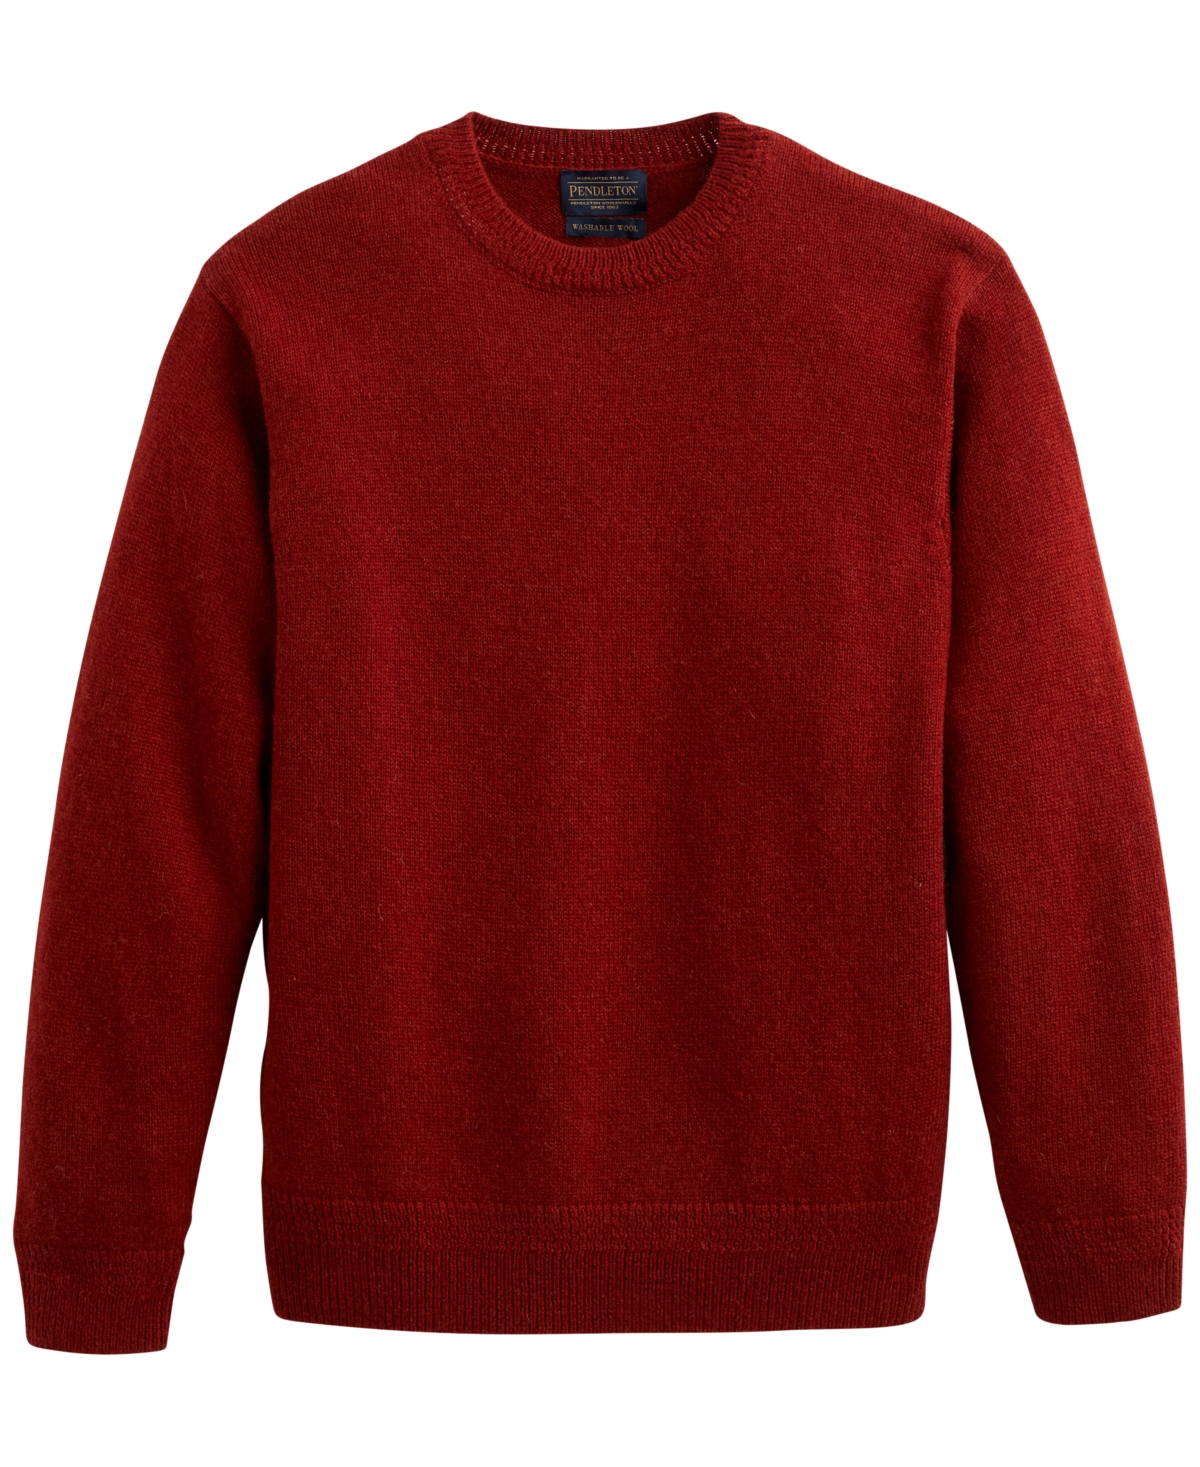 Pendleton Men's Shetland Wool Crewneck Sweater In Chili Red